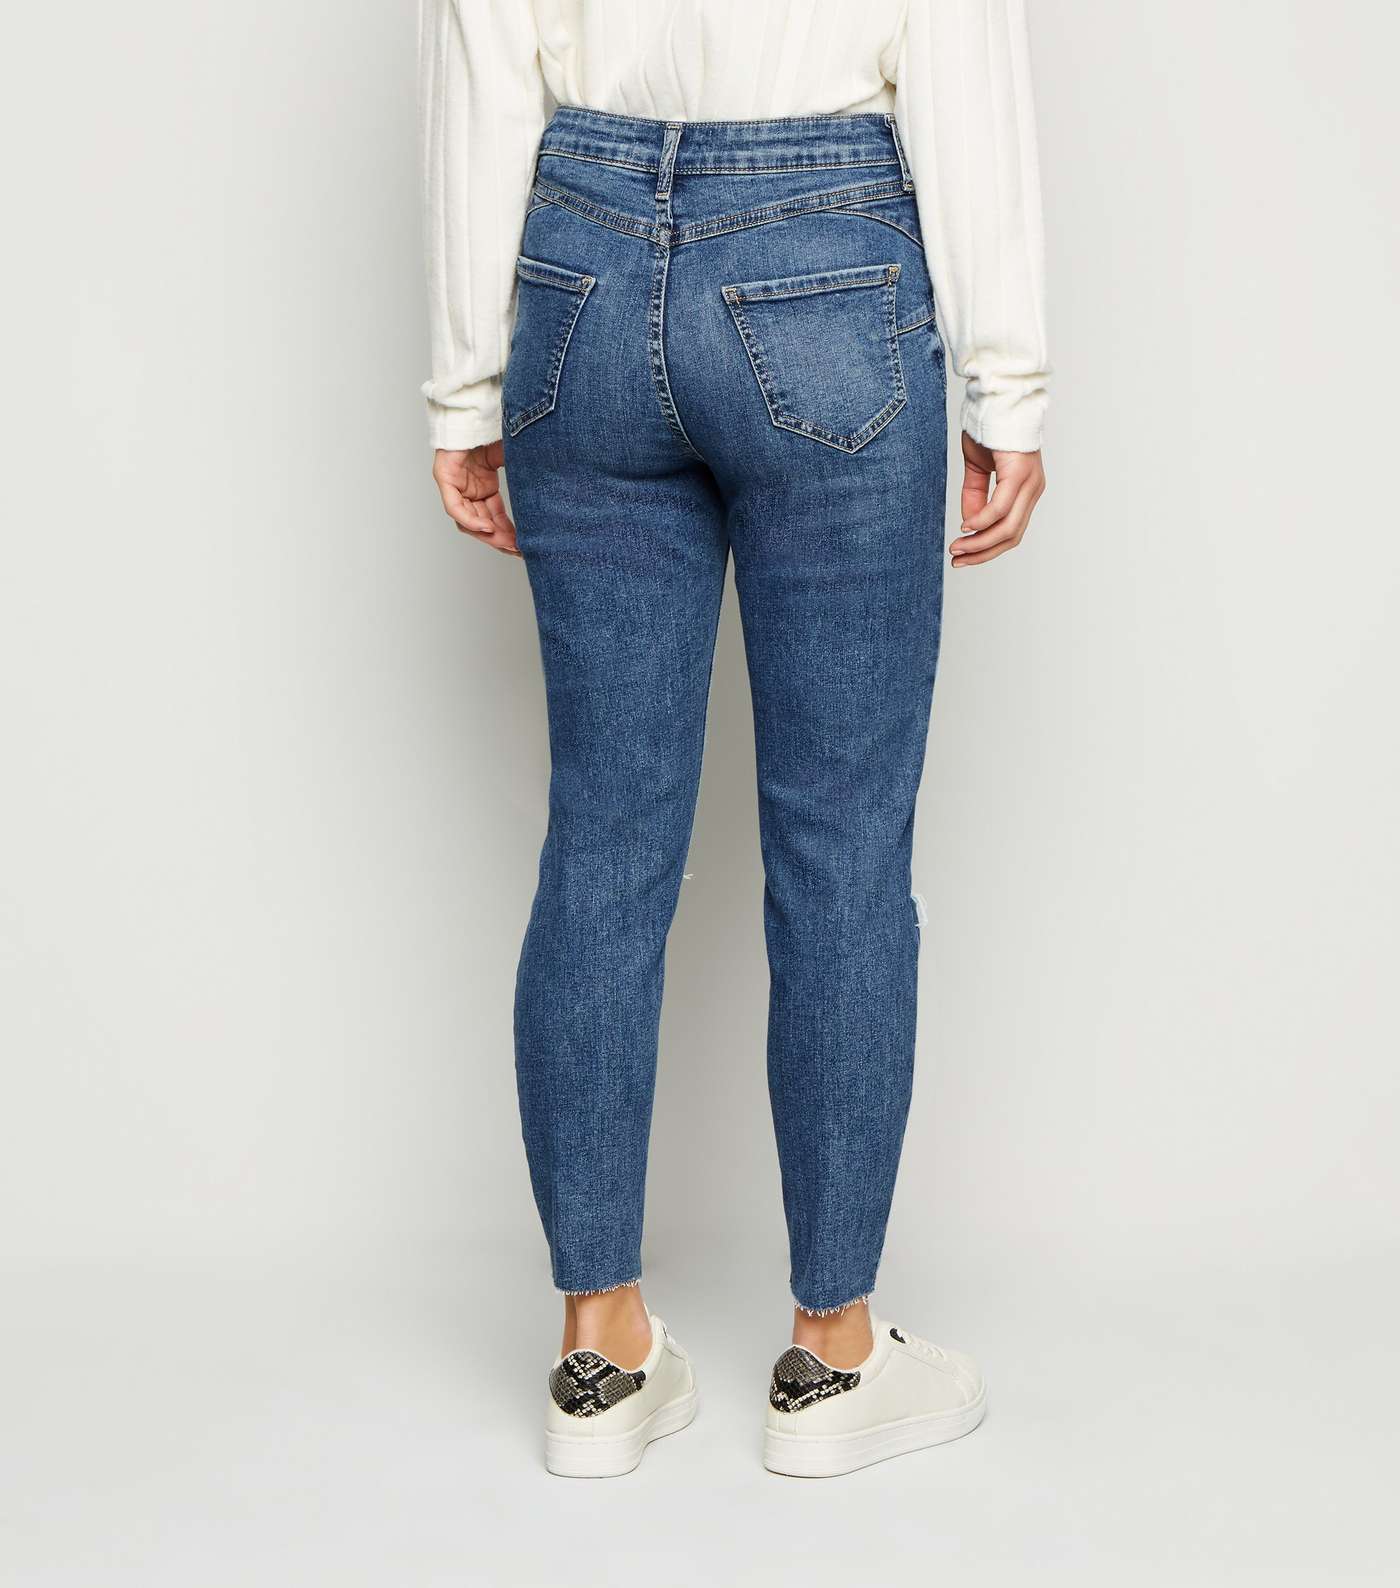 Petite Blue 'Lift & Shape' Ripped Jenna Skinny Jeans Image 3